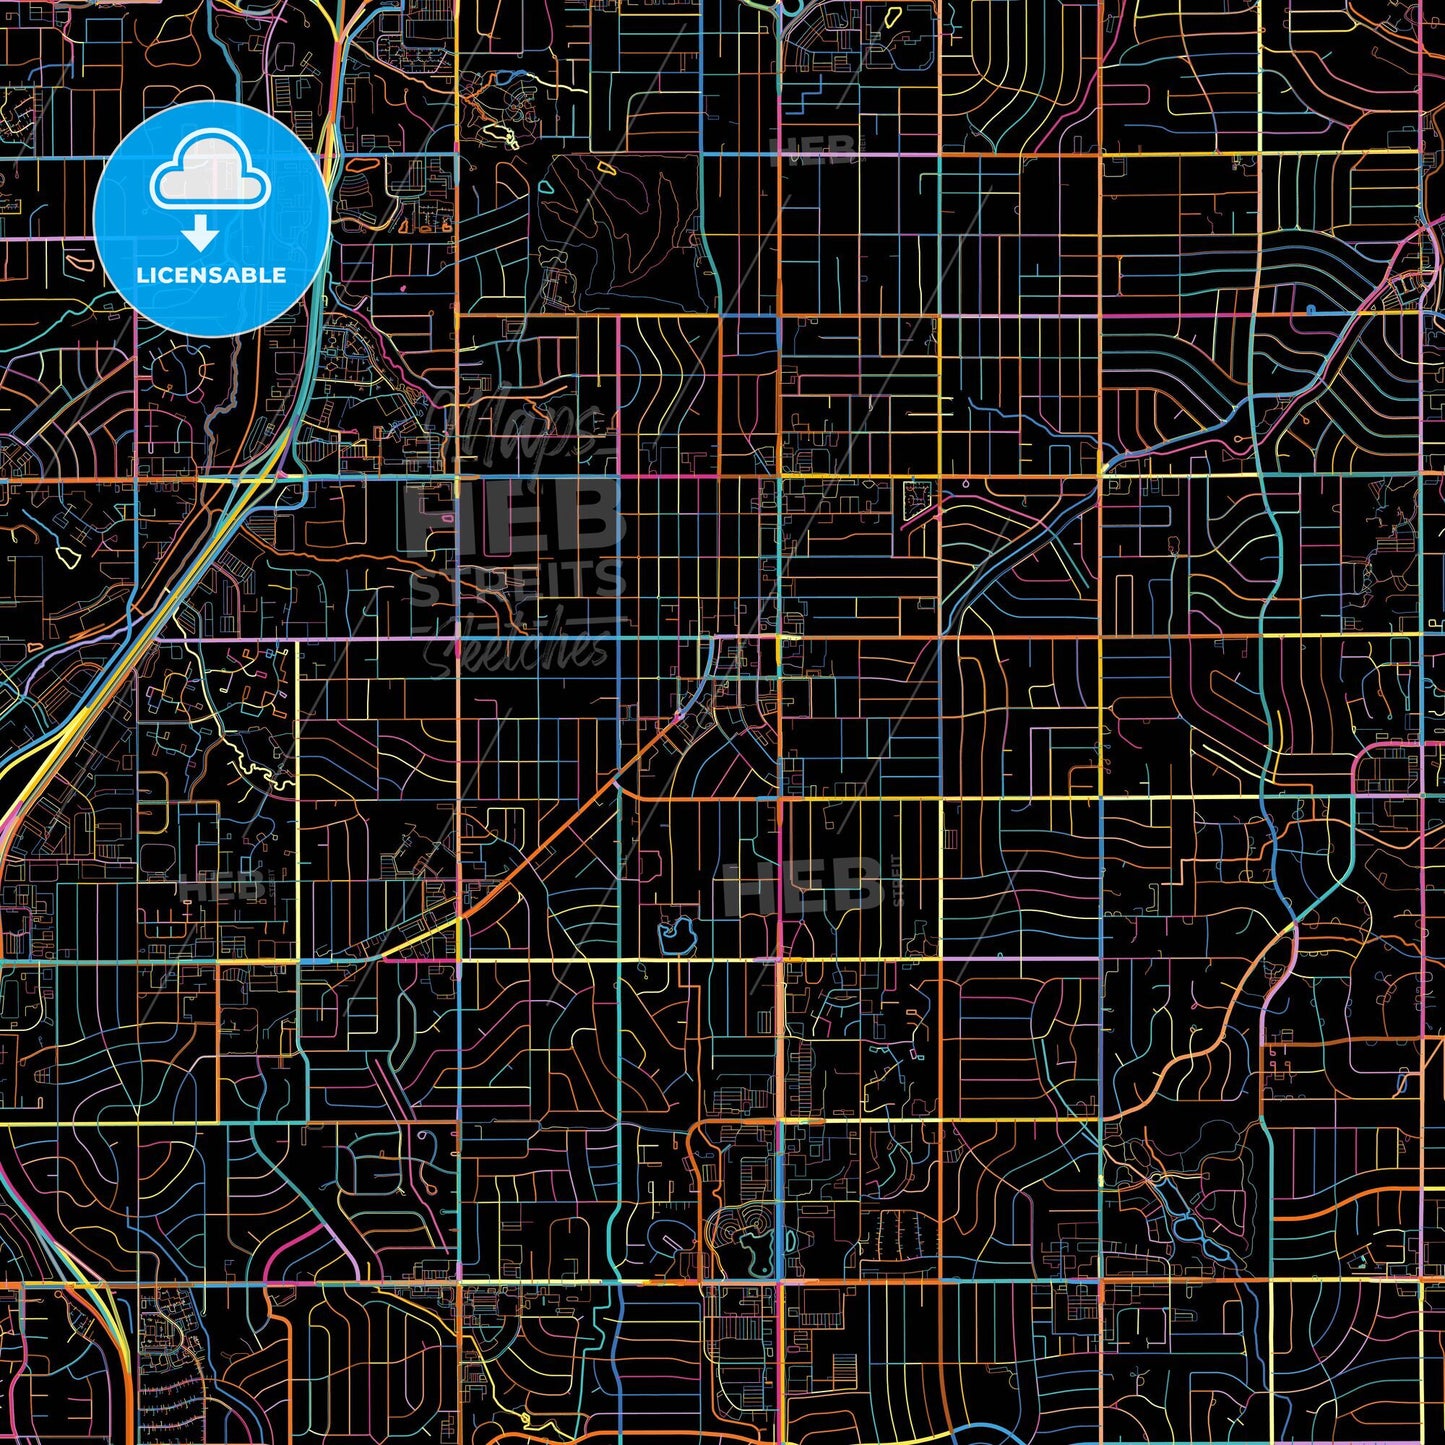 Overland Park, Kansas, United States, colorful city map on black background